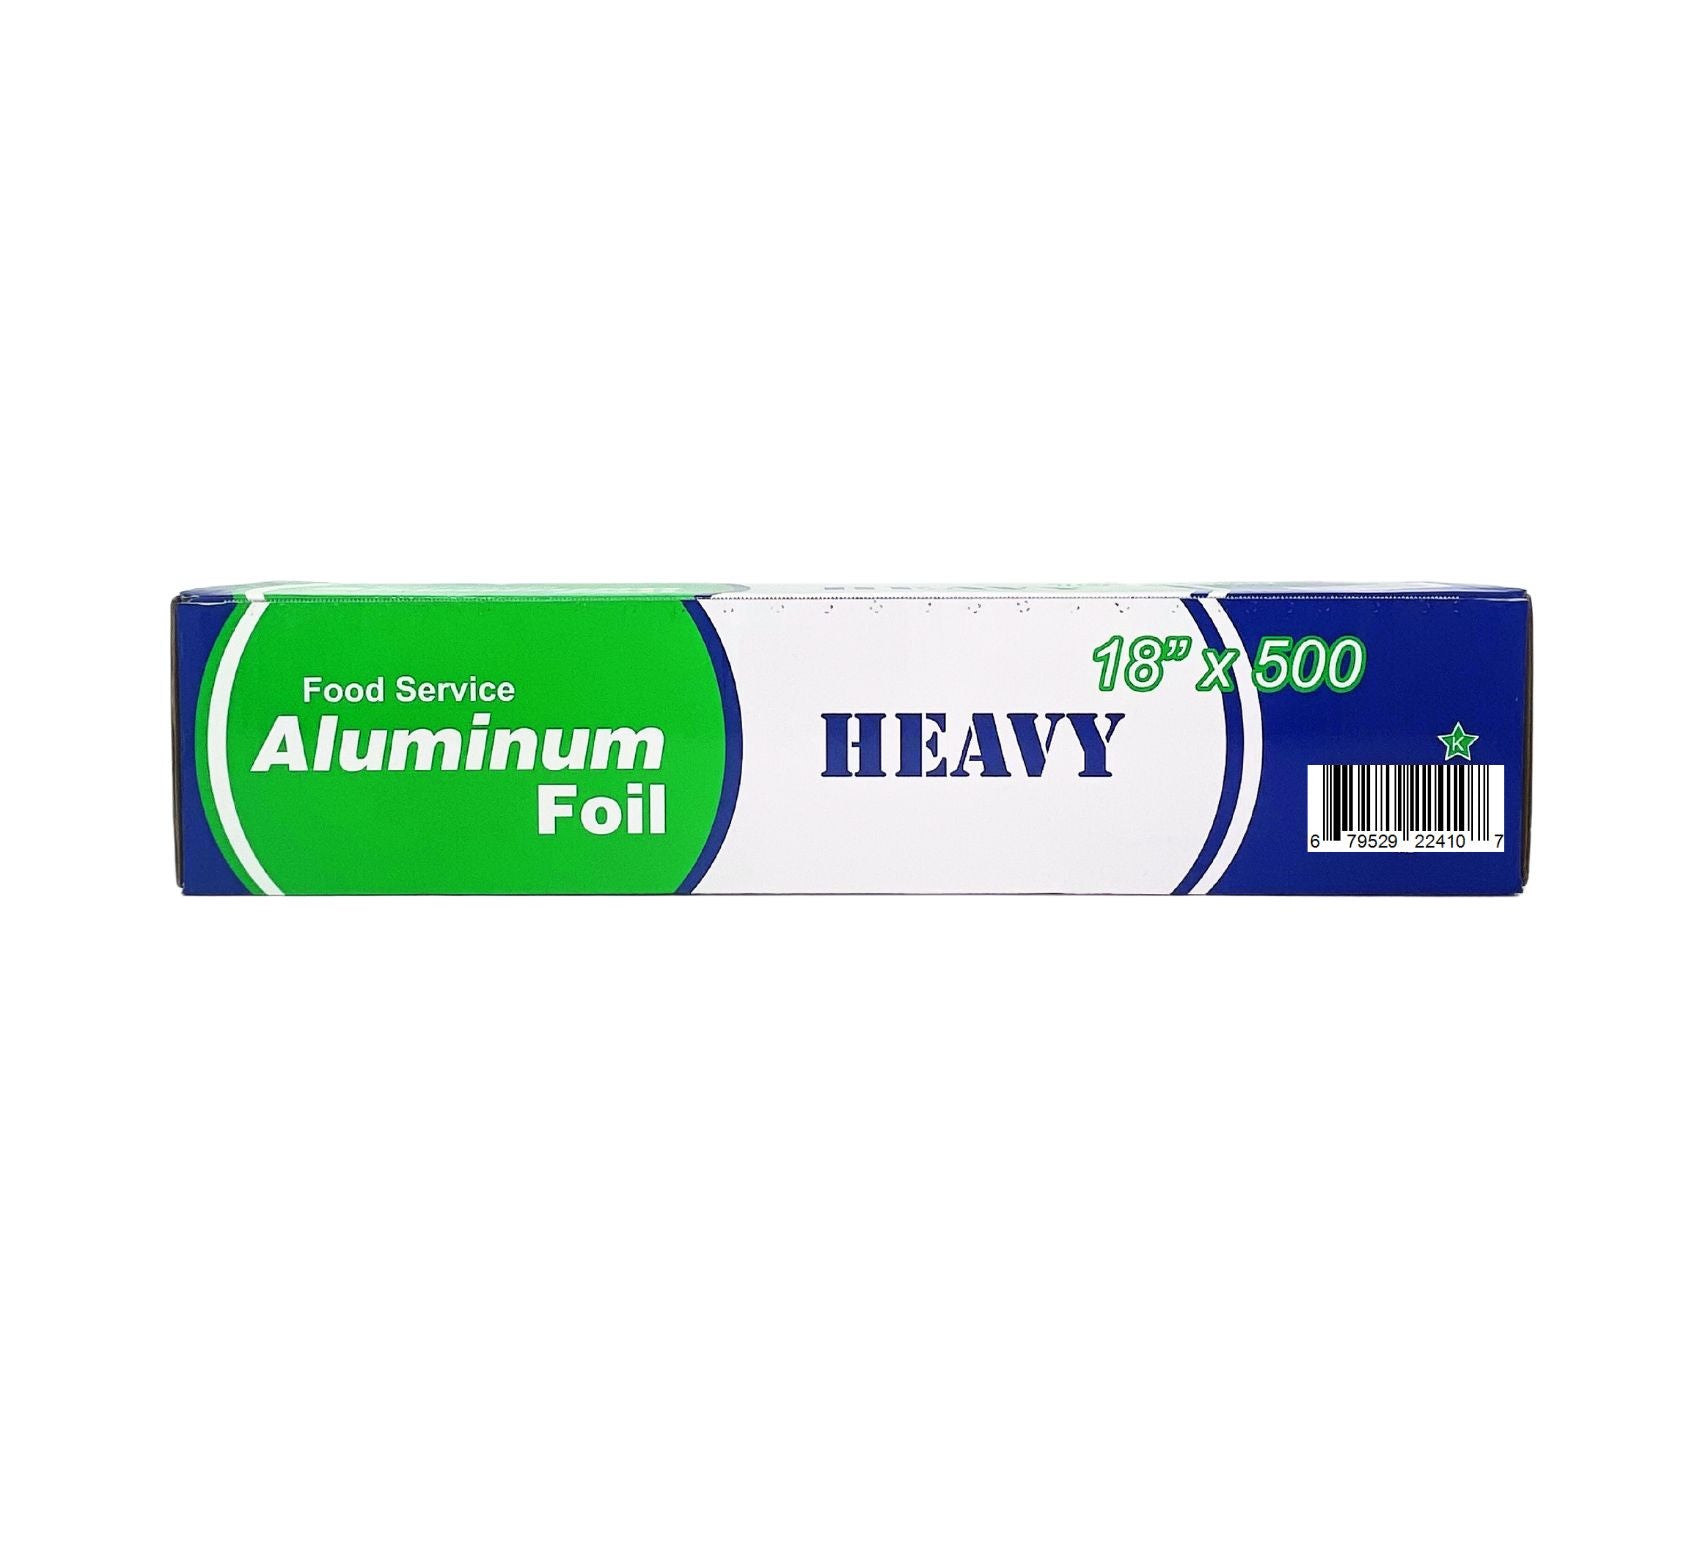 Aluminum Foil 18 x 500' Heavy Duty